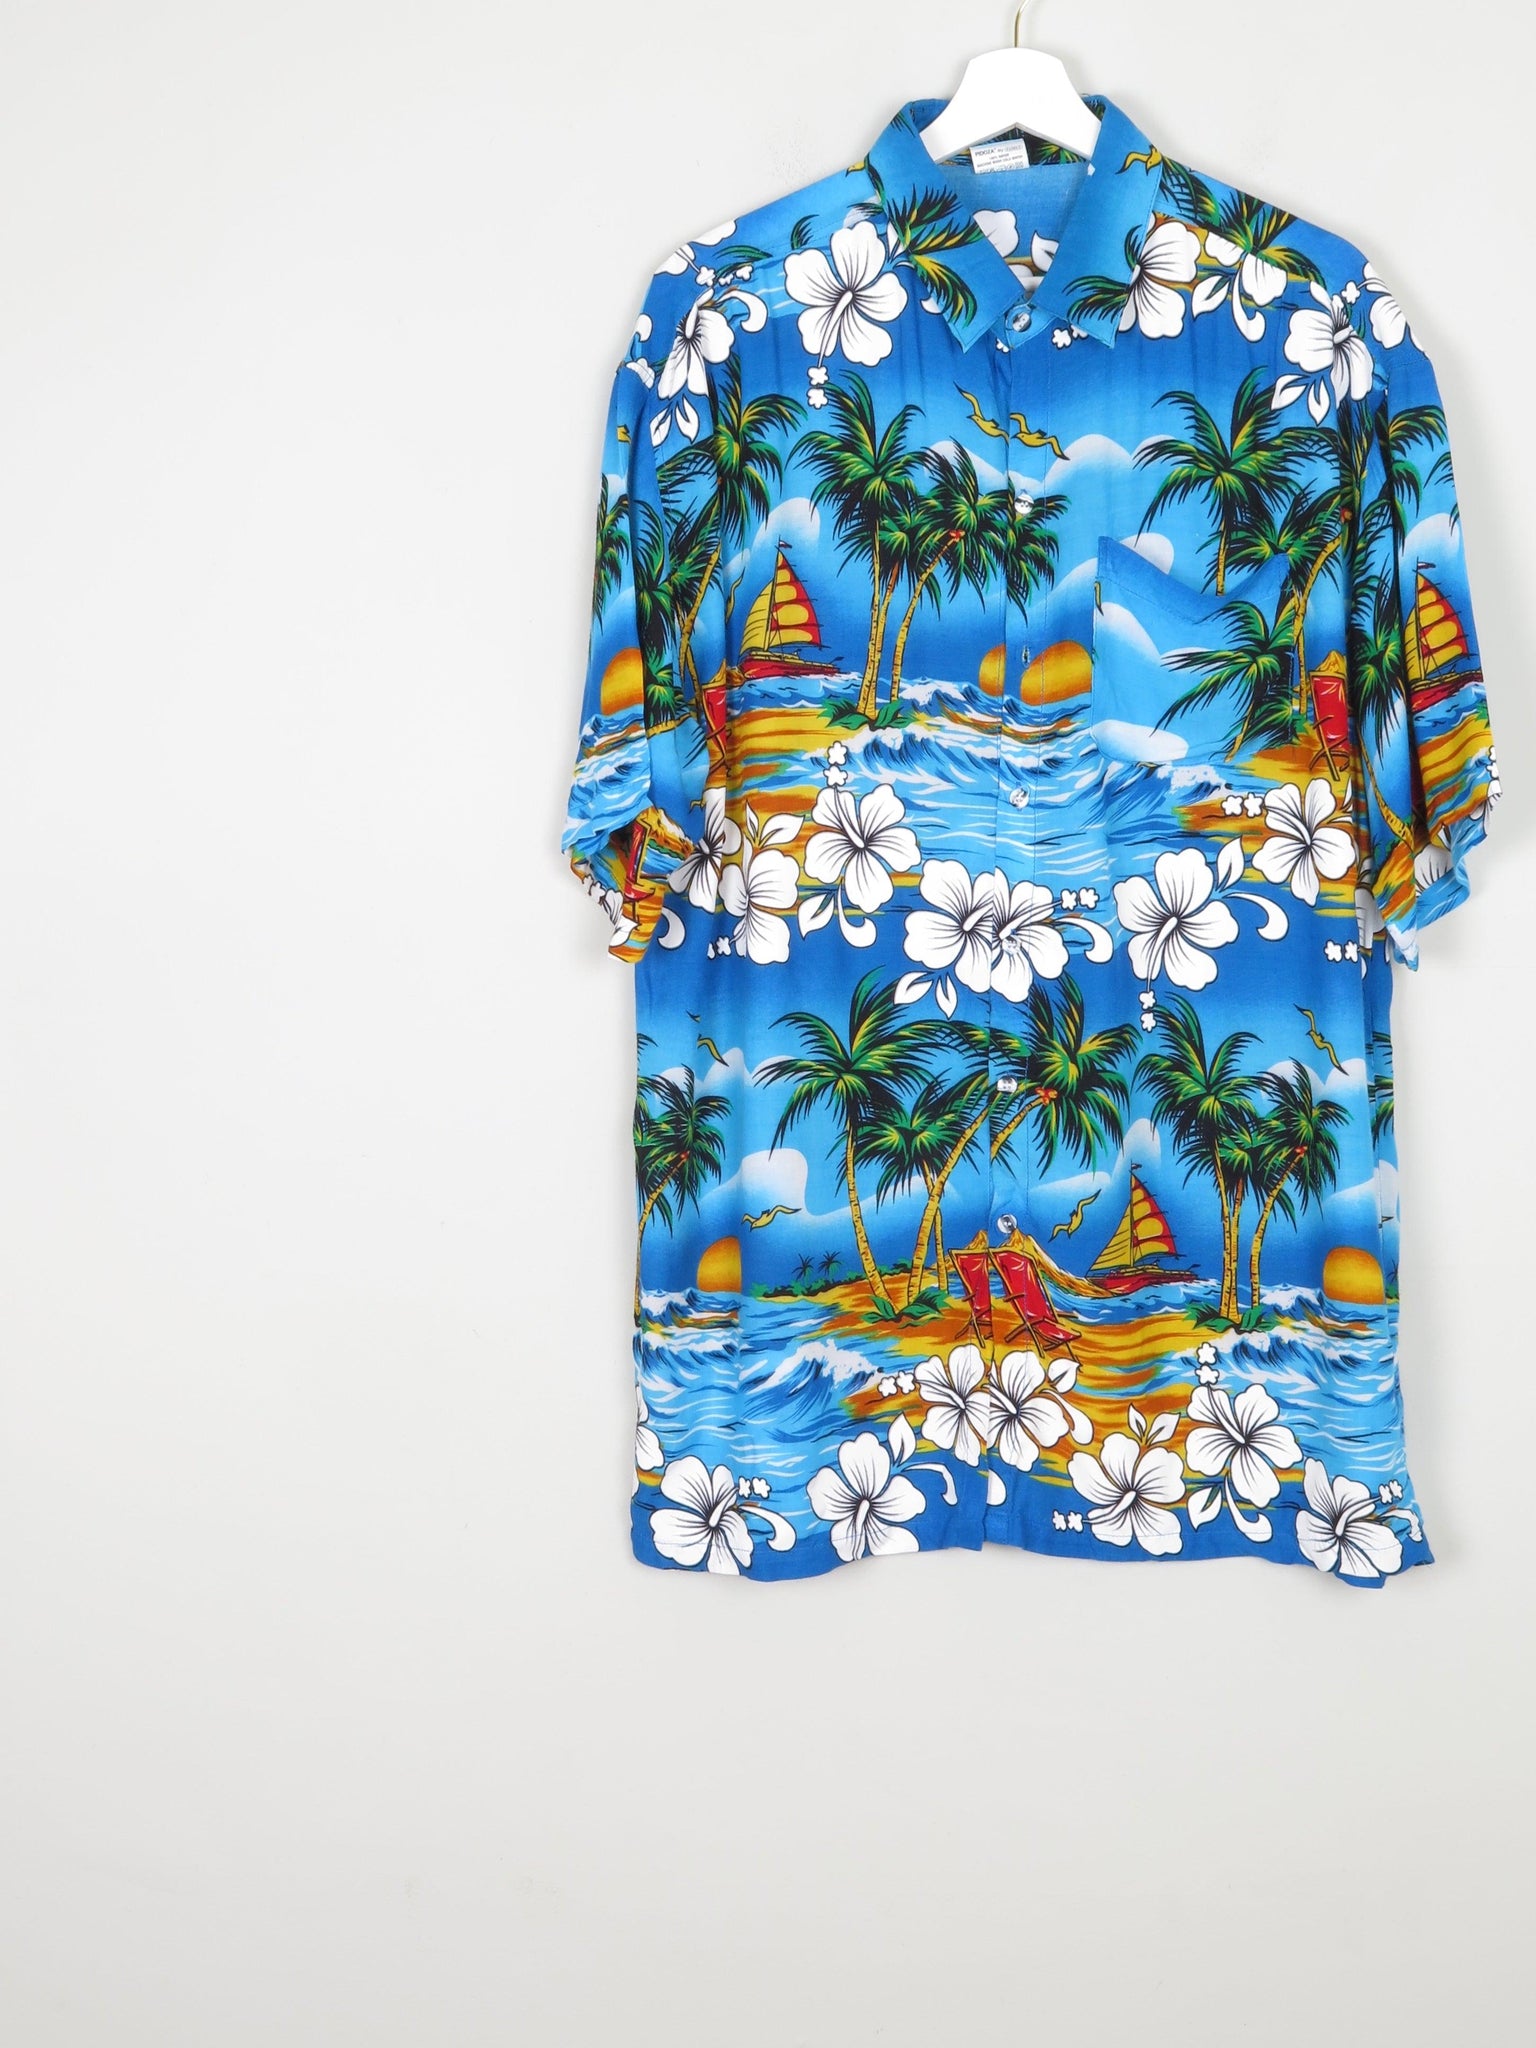 Men's Classic Turquoise Hawaiian Style Shirt XL - The Harlequin